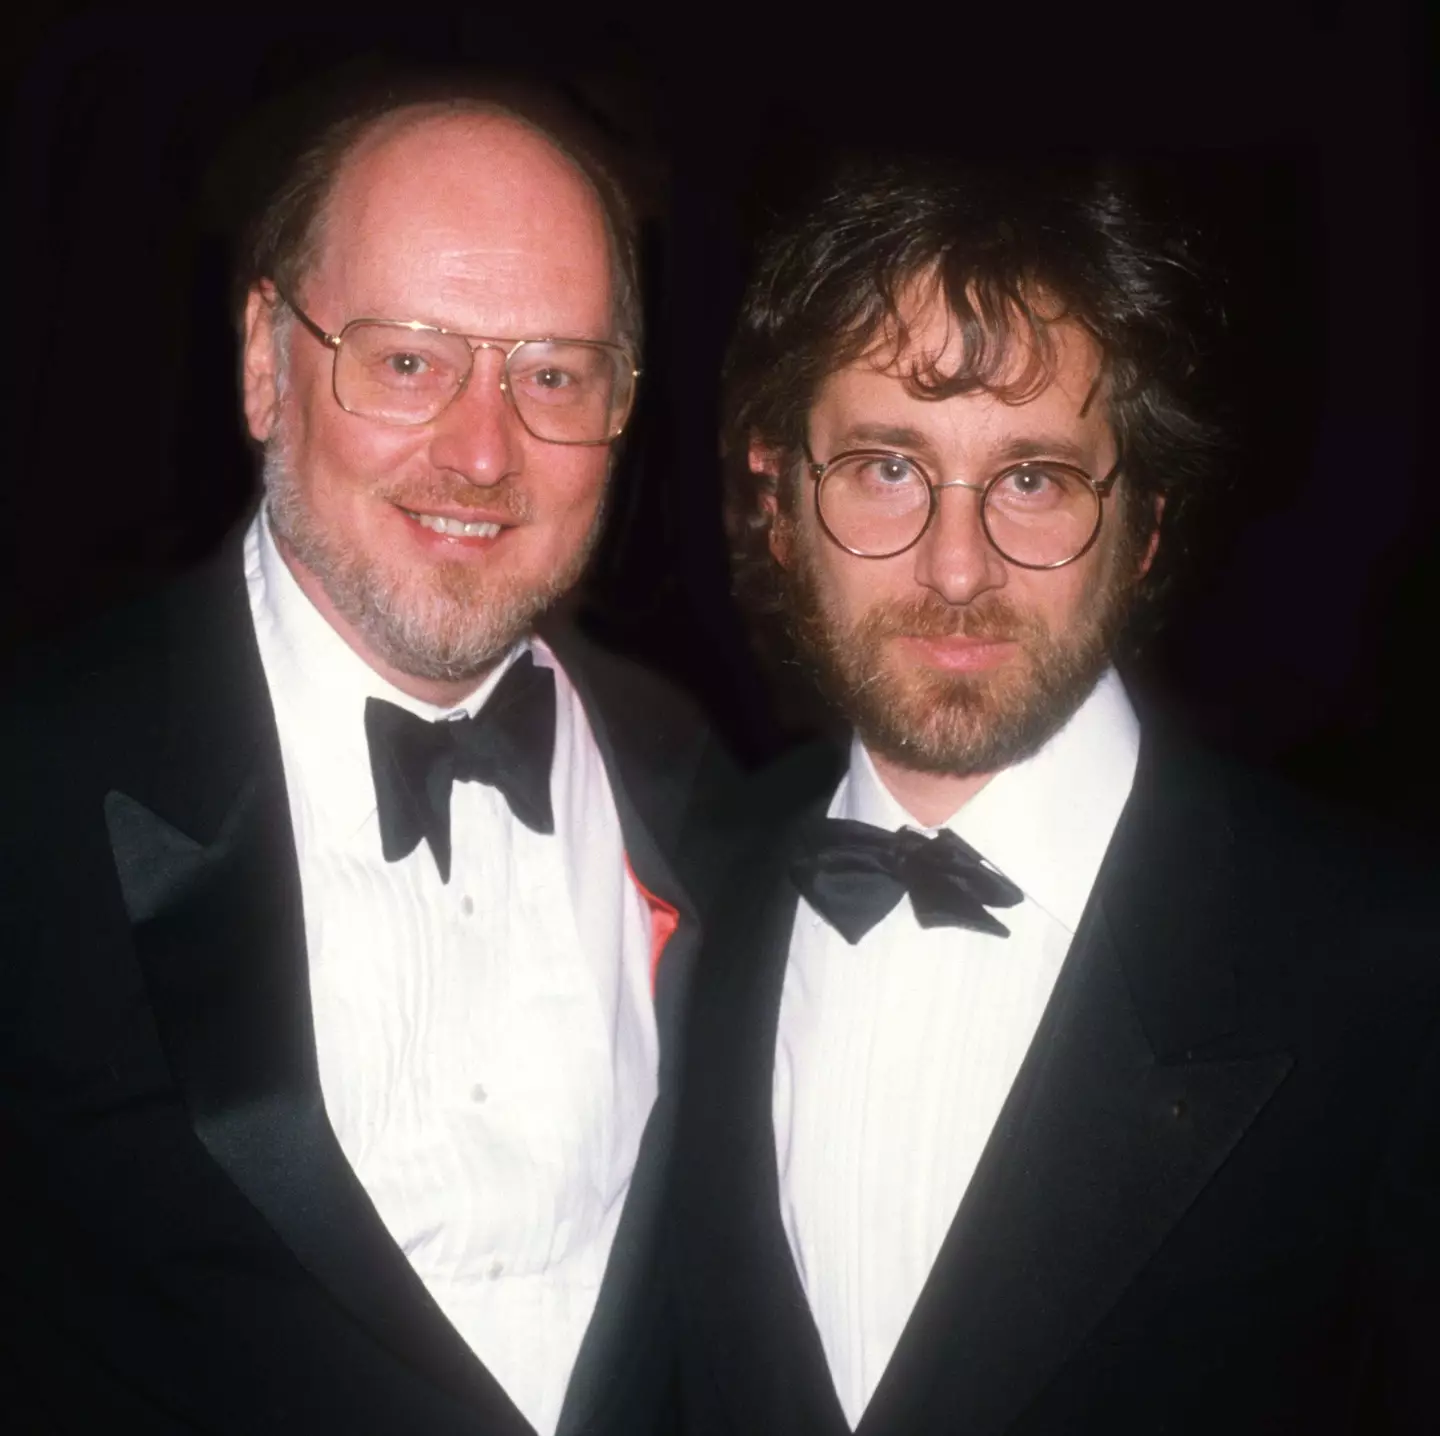 John Williams with Steven Spielberg in 1984.